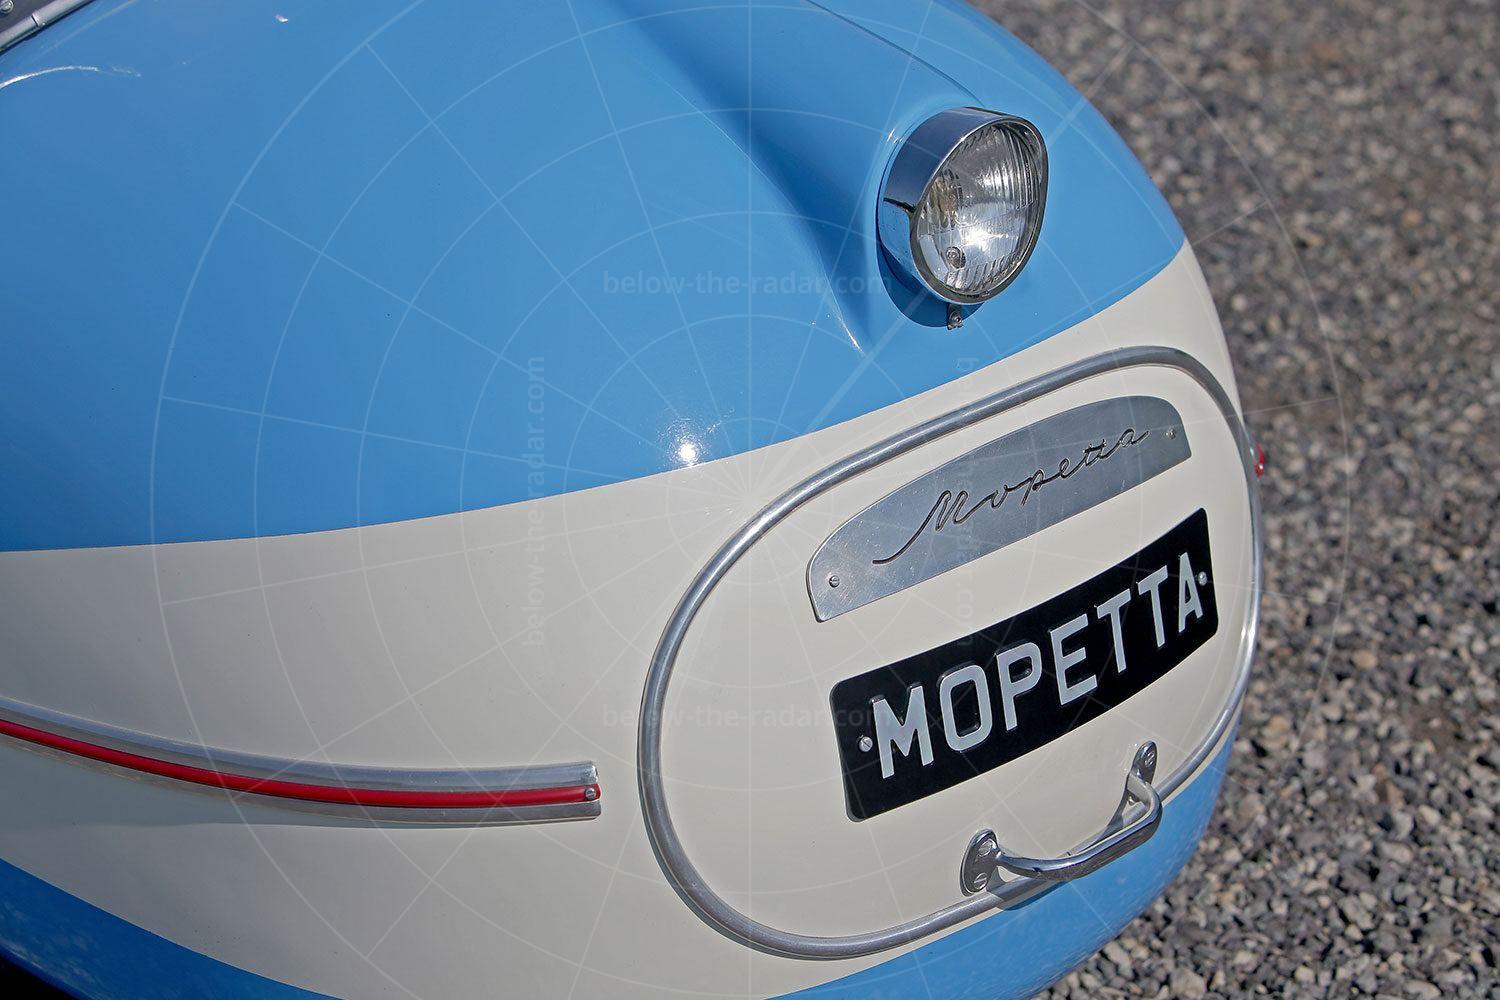 The Mopetta's ultra-sleek nose Pic: magiccarpics.co.uk | 